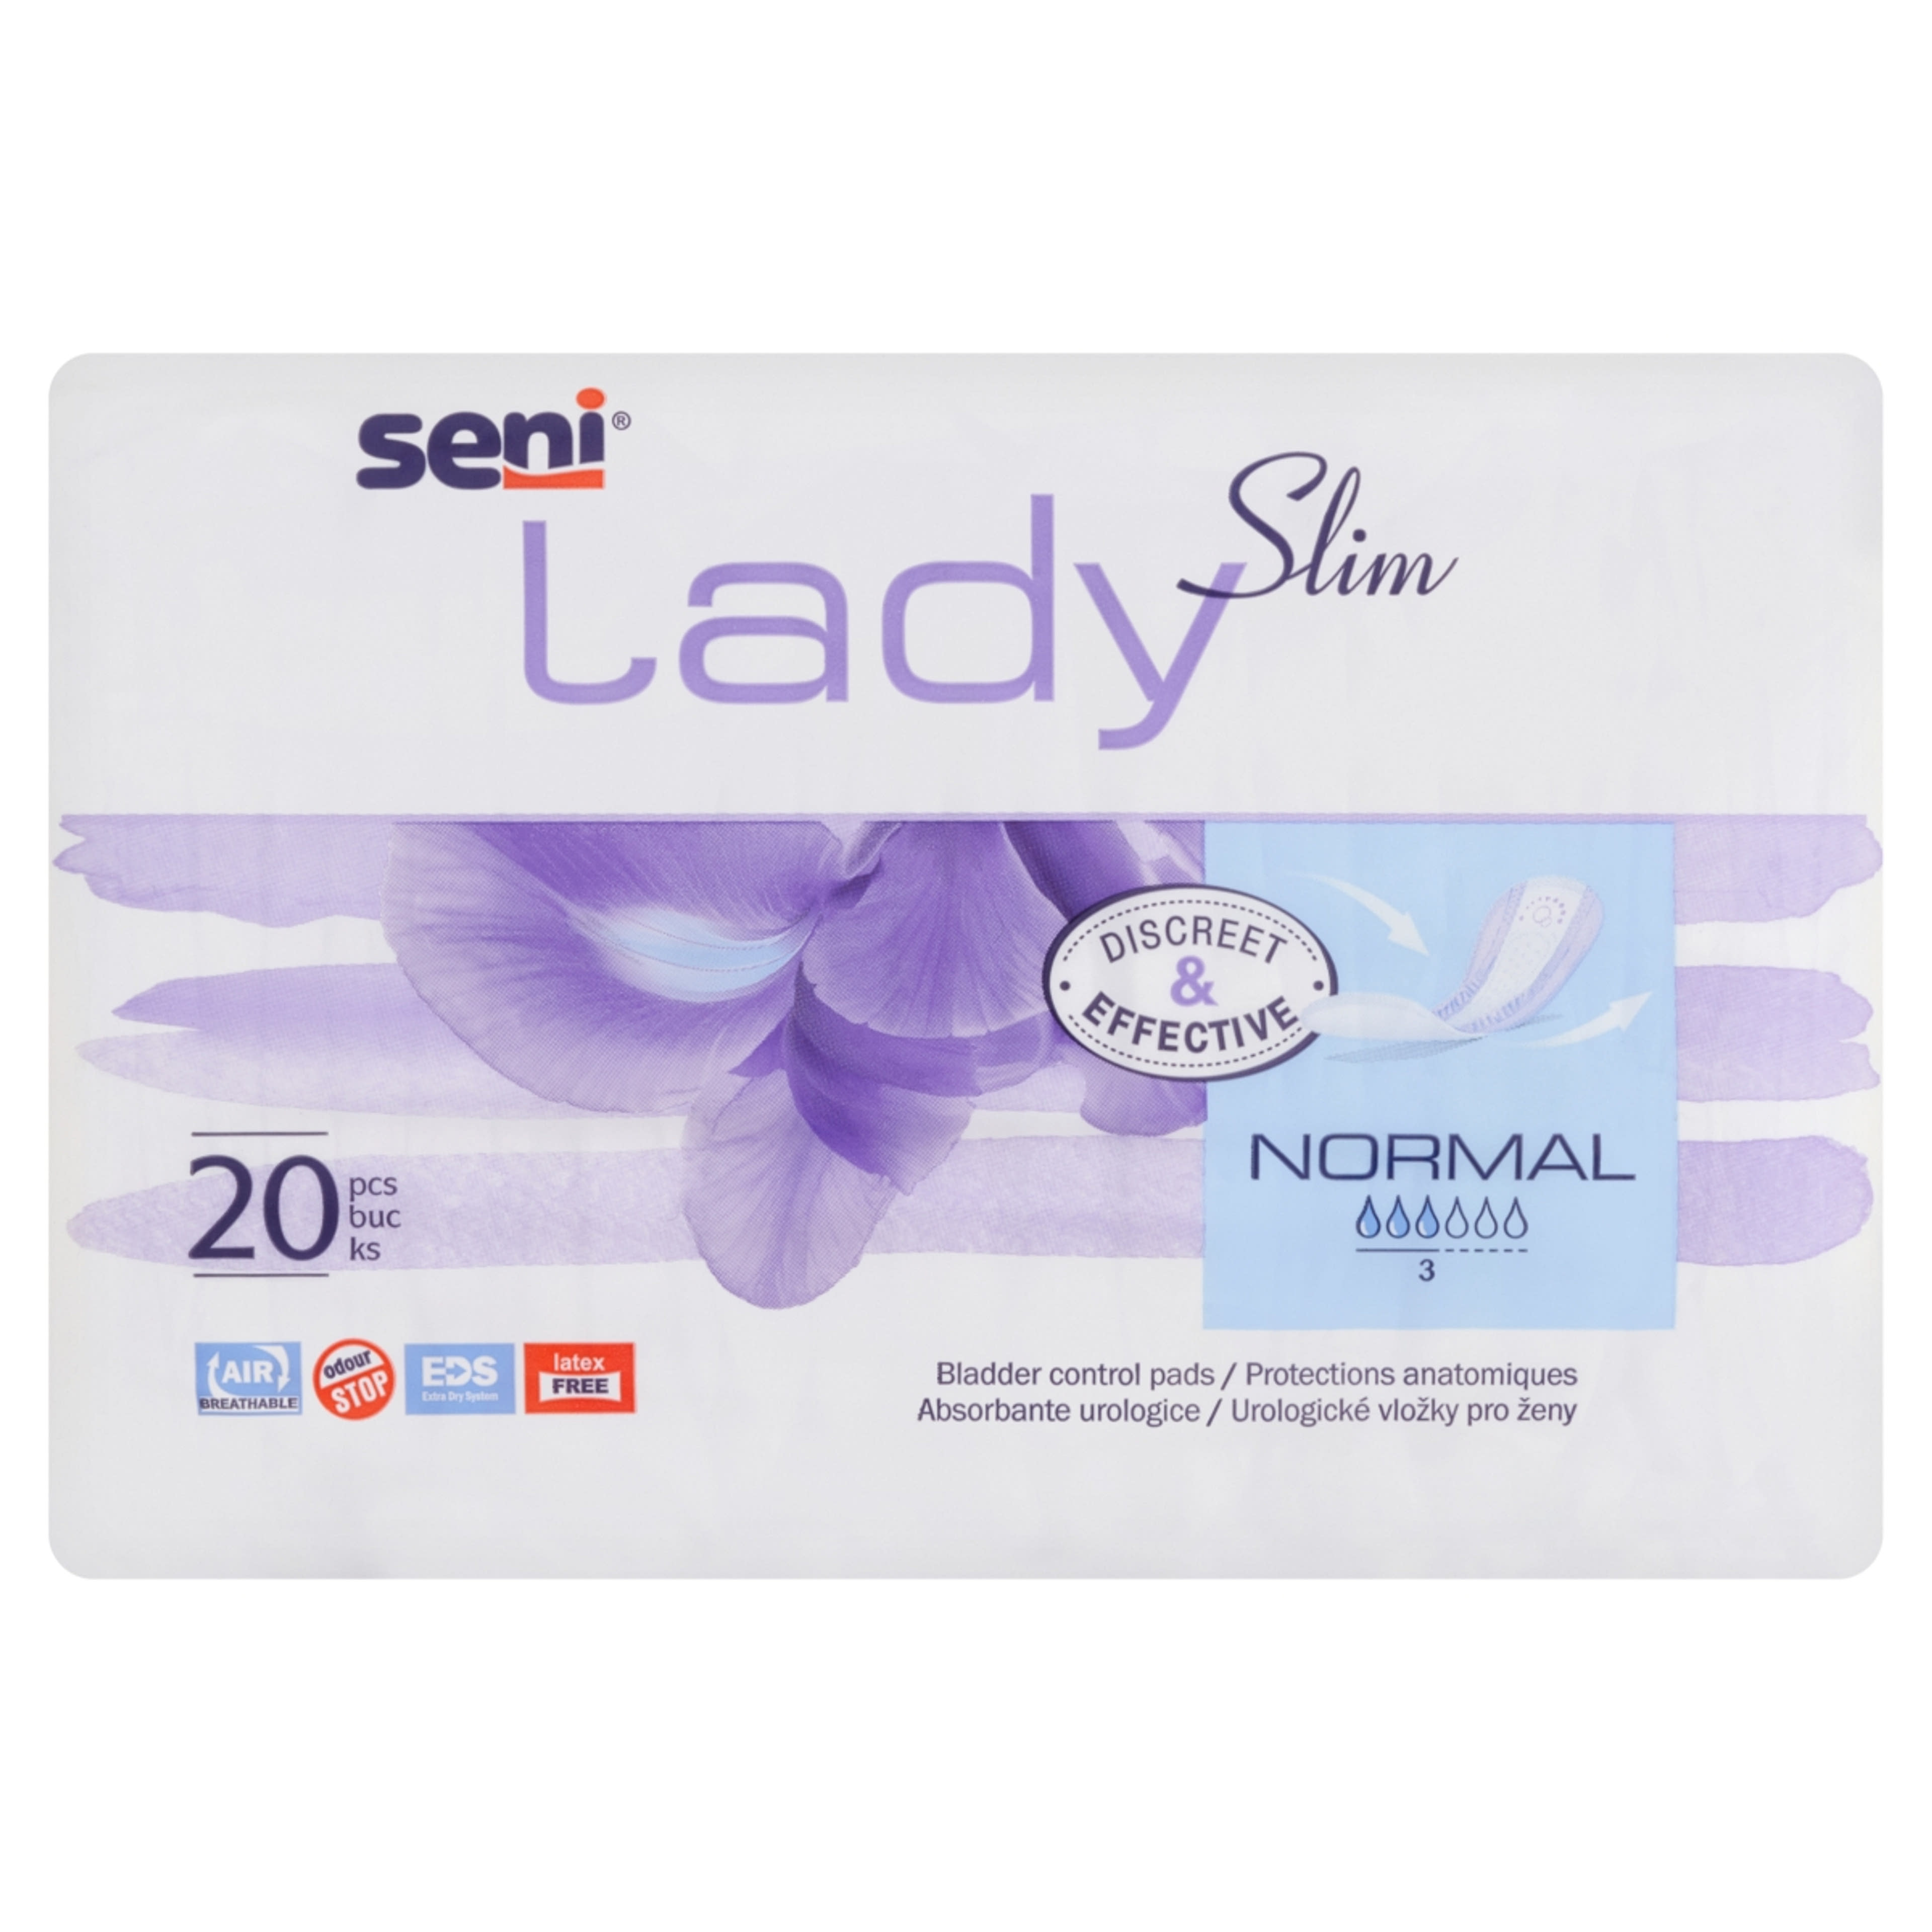 Seni Lady Slim Normal inkontinencia betét - 20 db